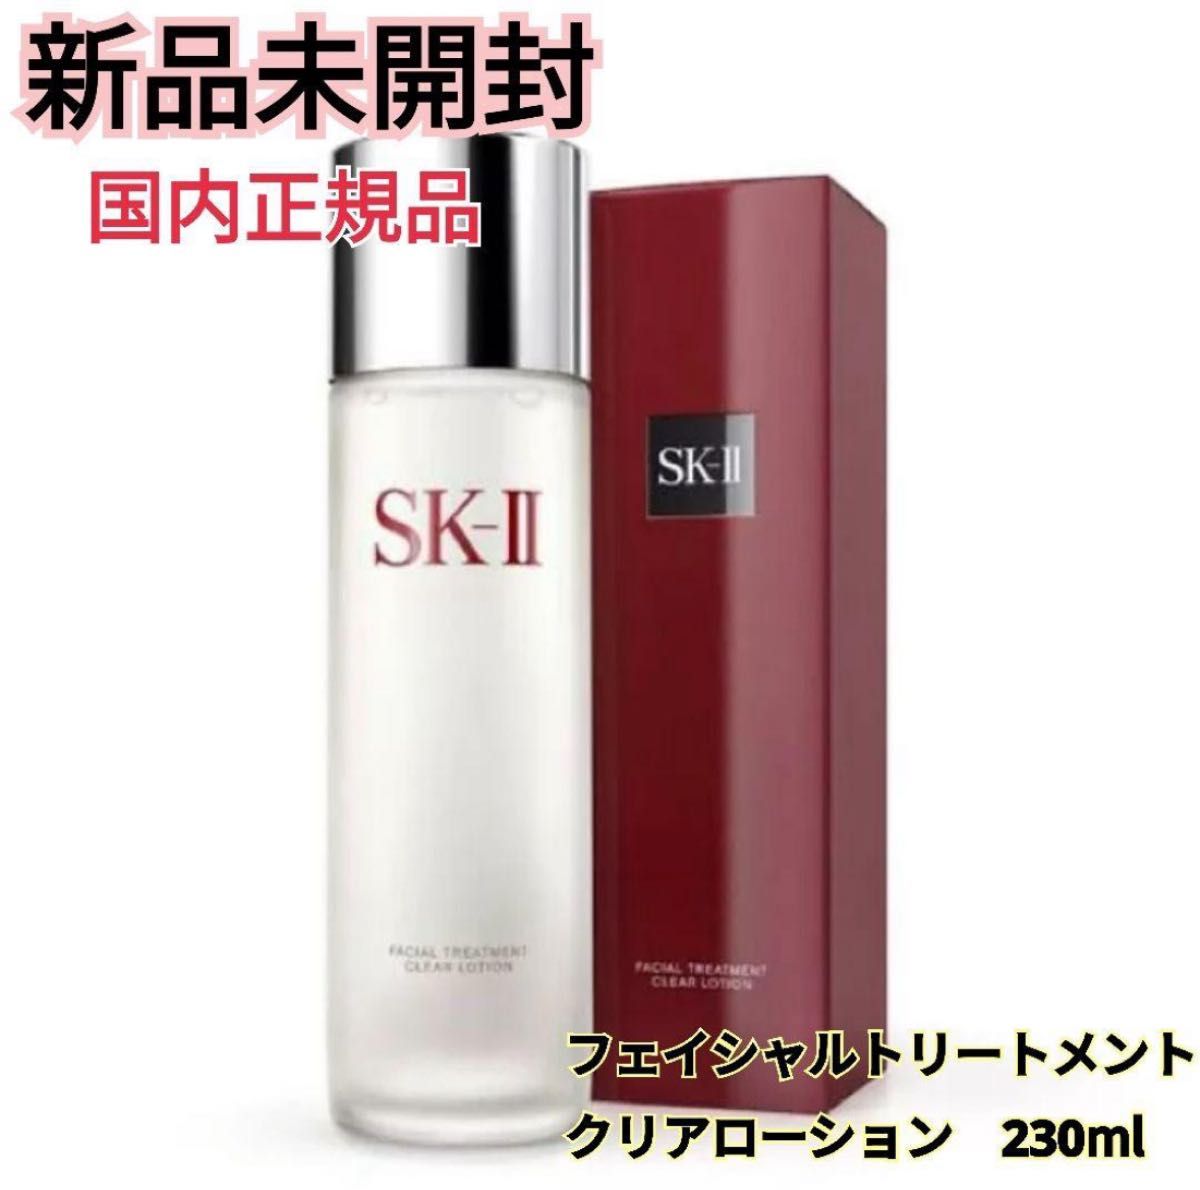 SK-II SK2 フェイシャルトリートメントクリアローション ふき取り化粧水230ml